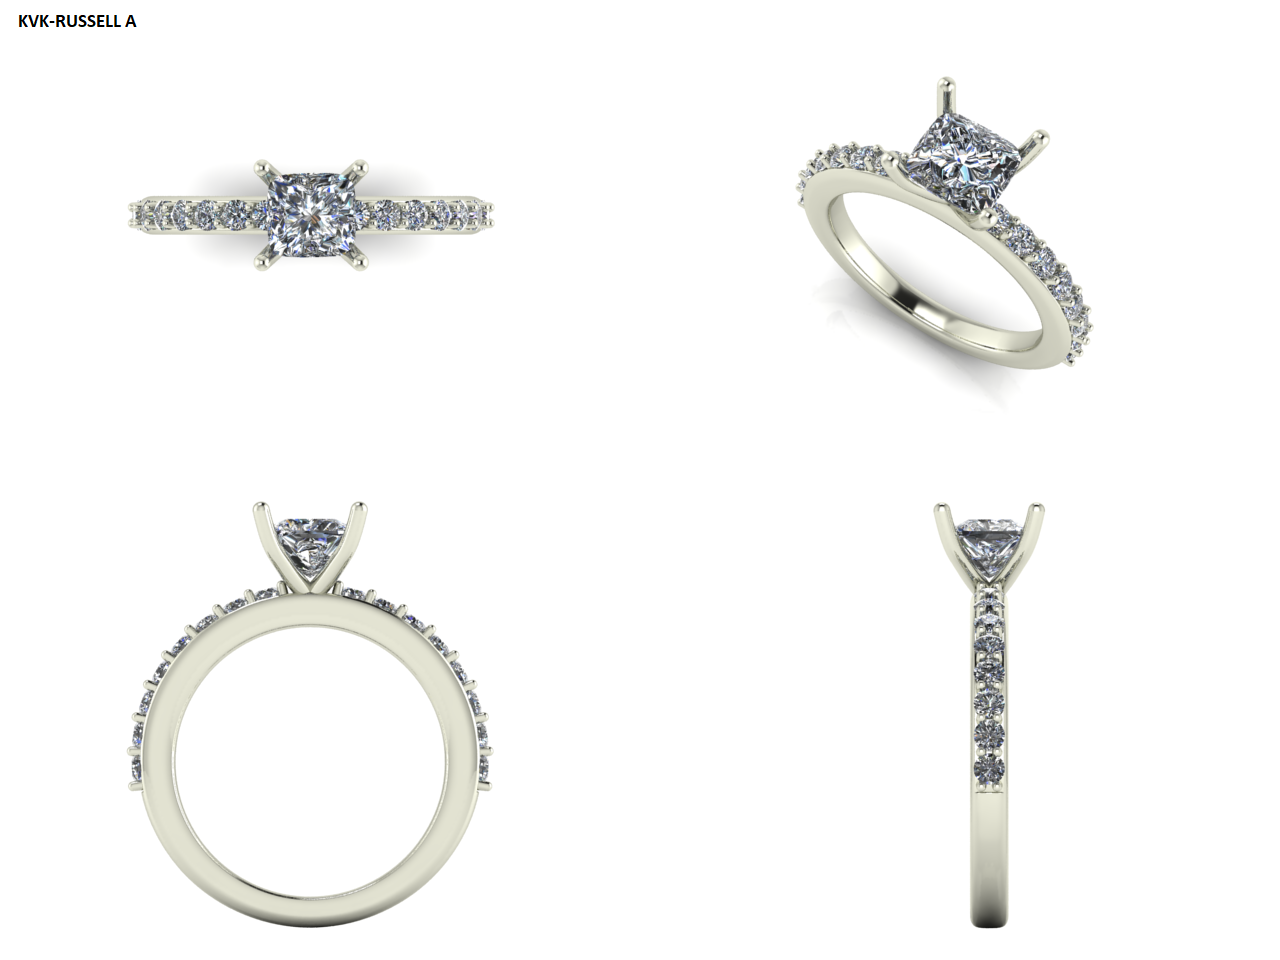 Turquoise and Diamond Engagement Ring Set